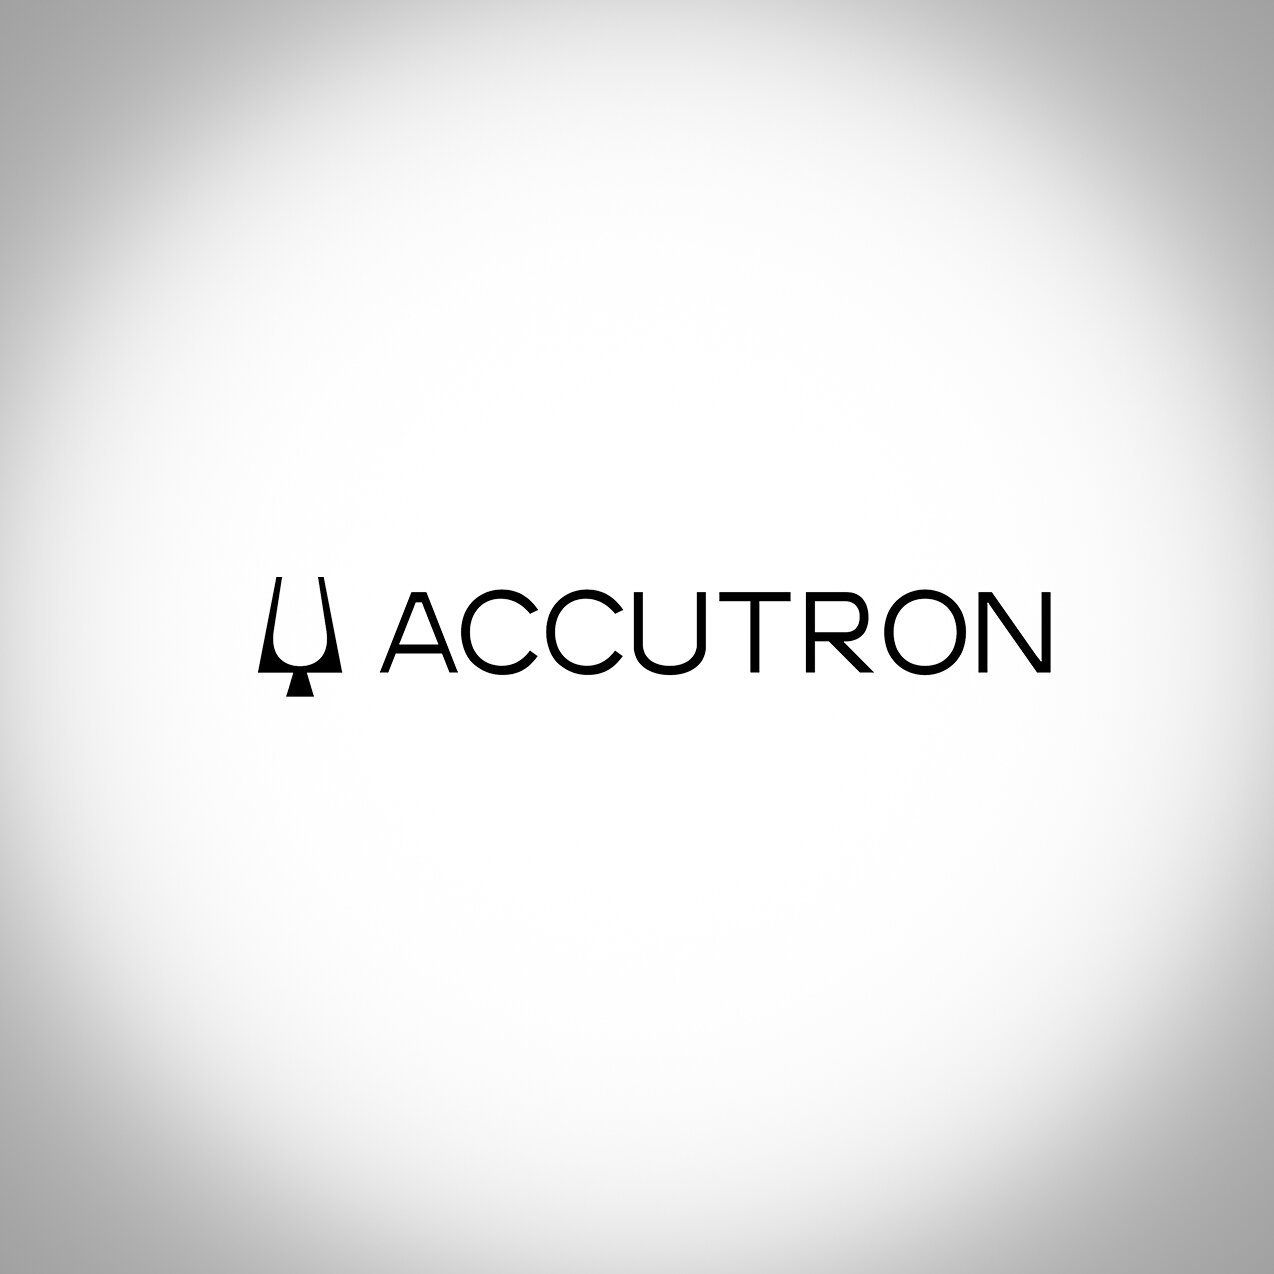 Accutron-logo-black.jpg